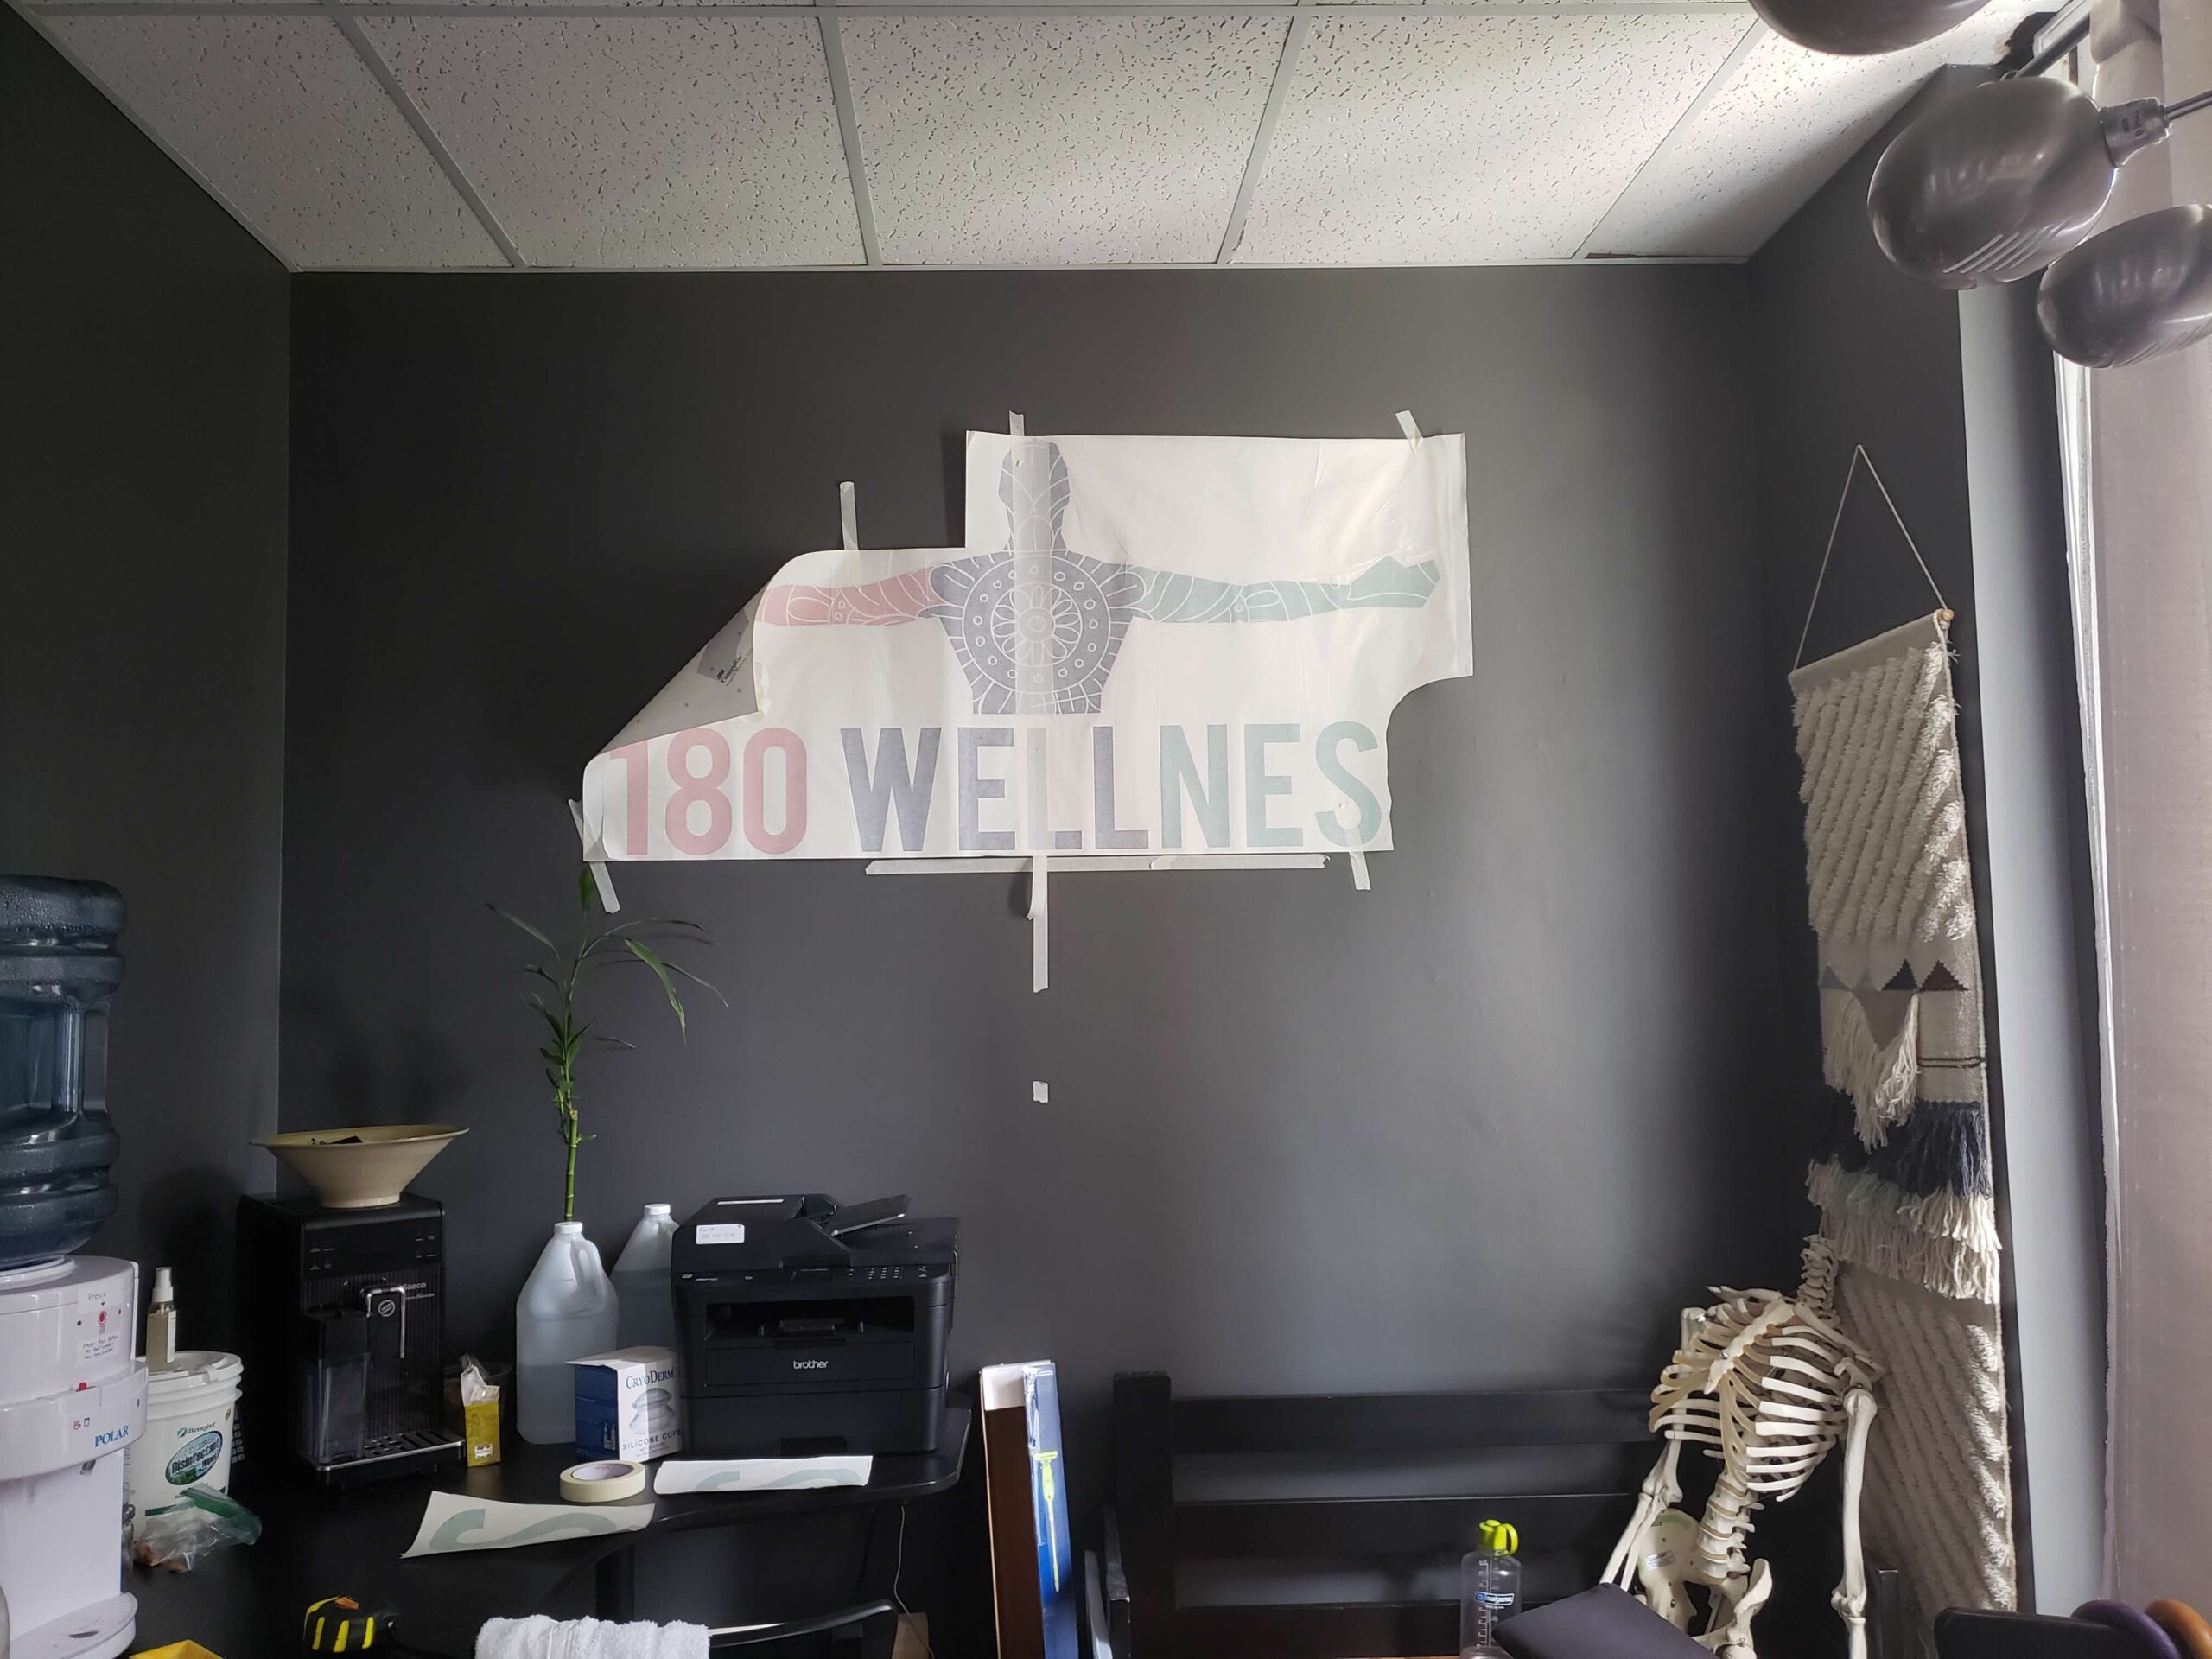 180 Wellness Clinic Installing Custom Wall Decal